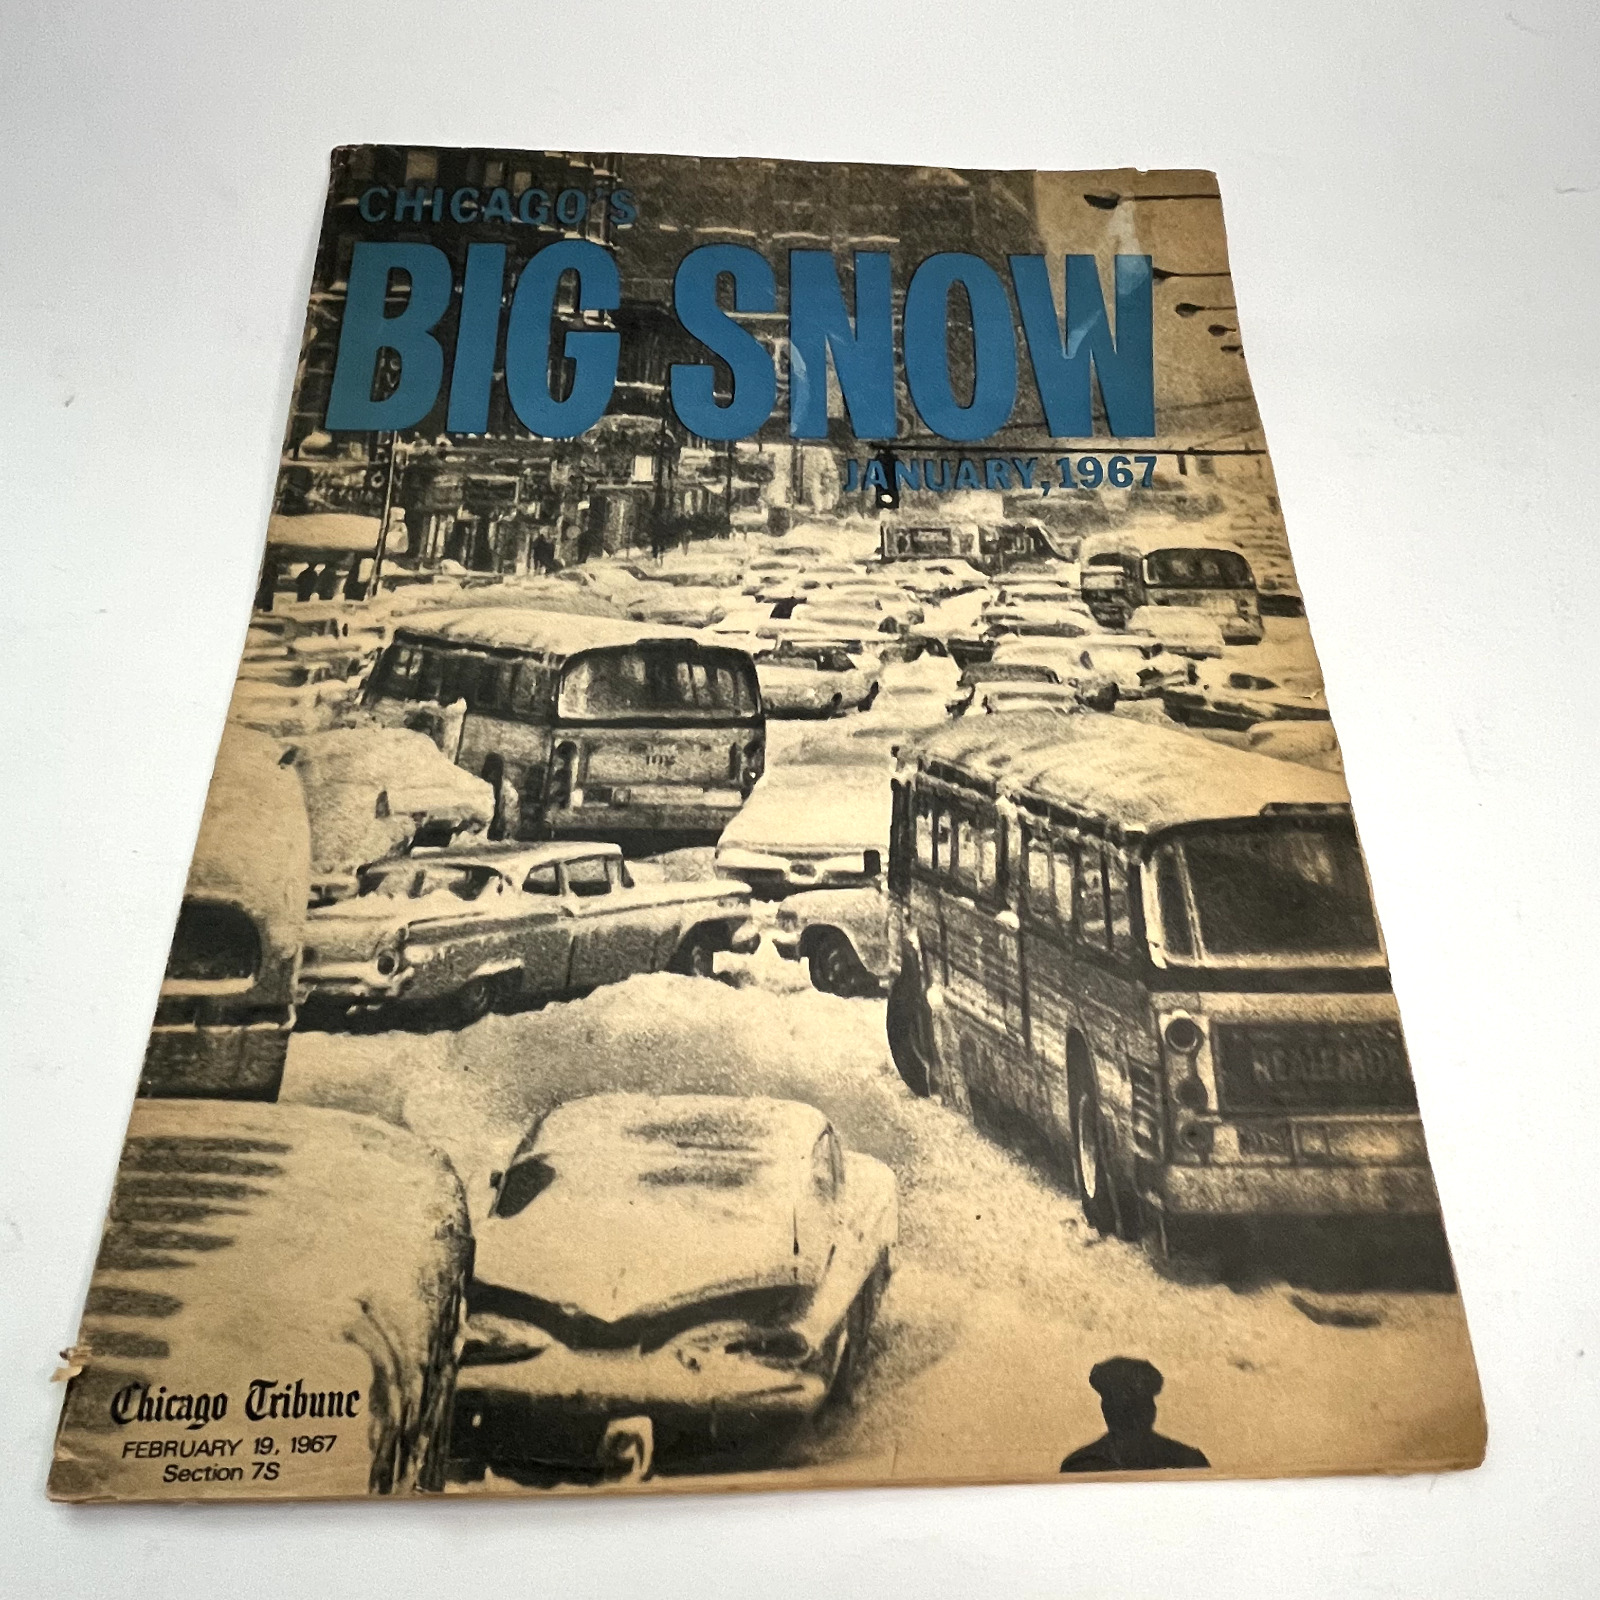 Chicago Tribune “Chicago\'s Big Snow” February 19, 1967 Section 7S: M